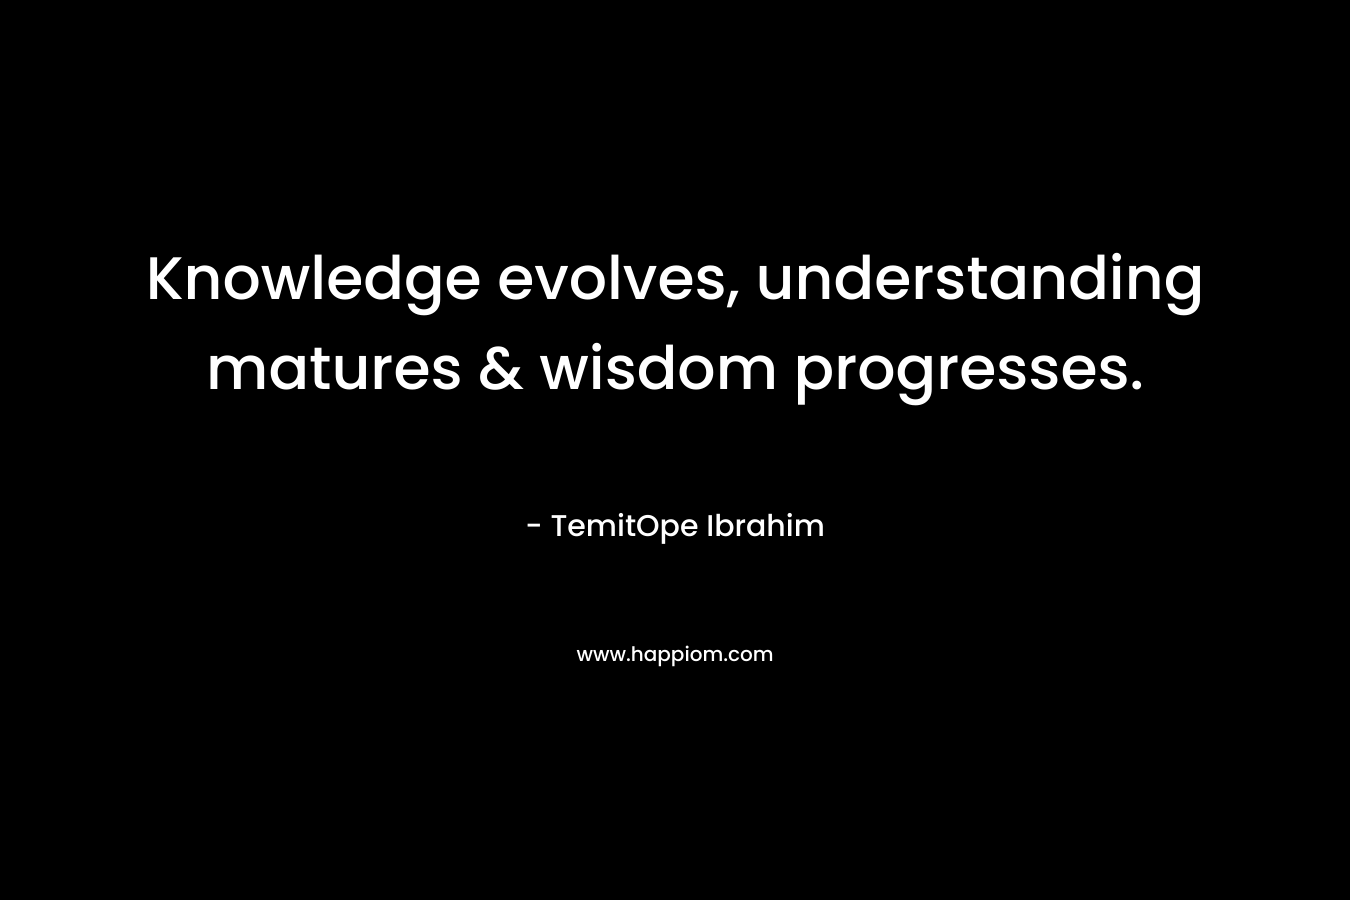 Knowledge evolves, understanding matures & wisdom progresses.